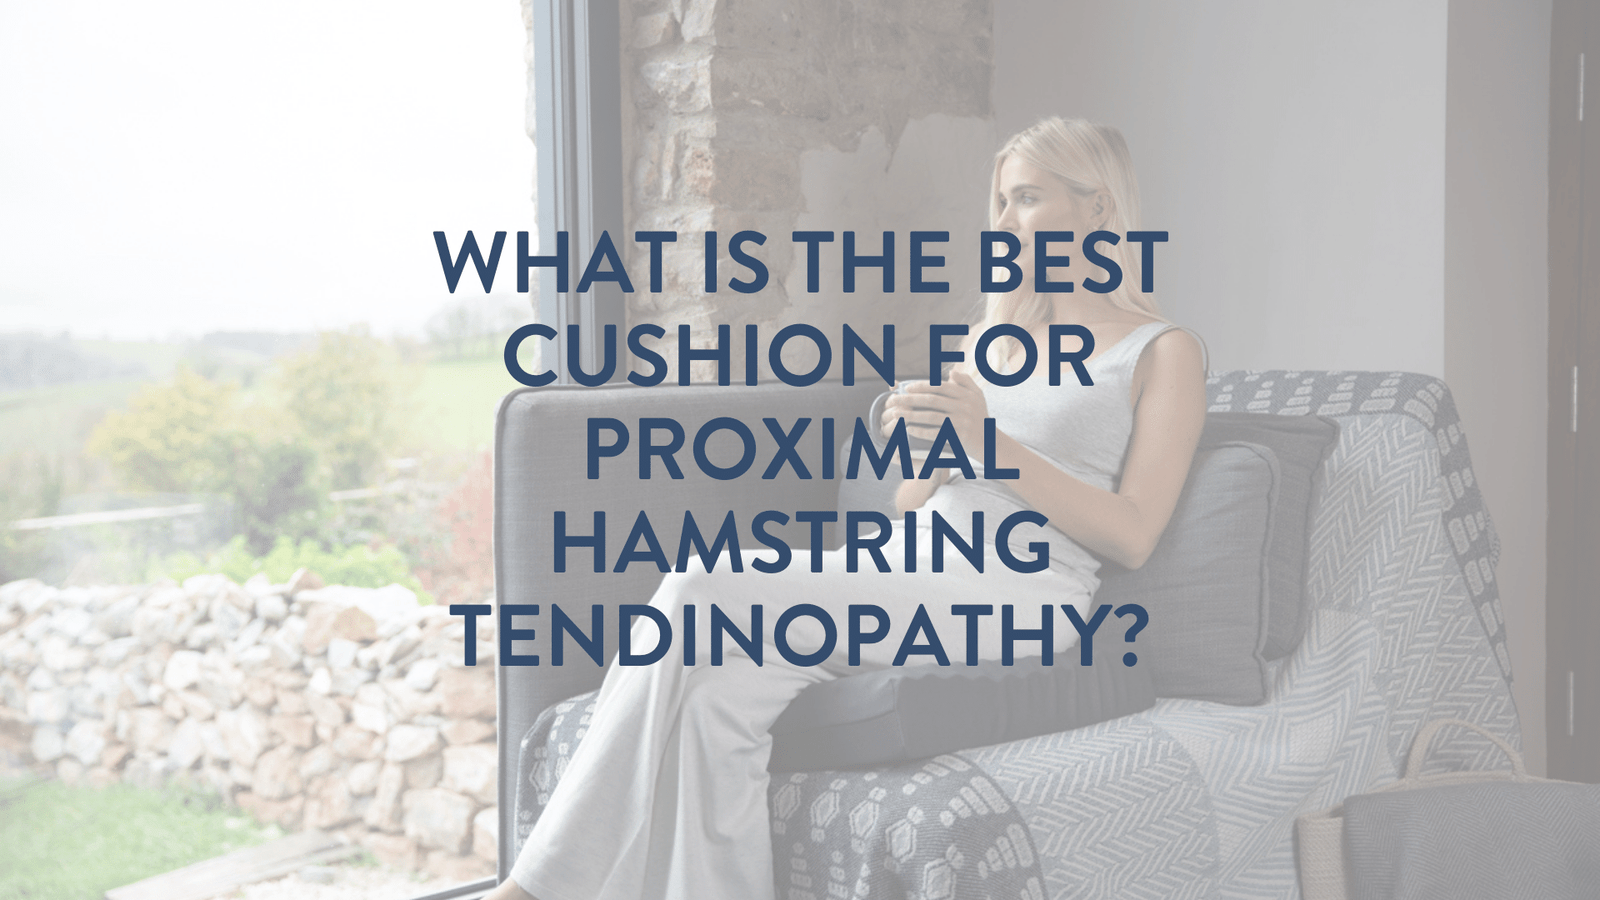 Proximal Hamstring Tendinopathy Cushion